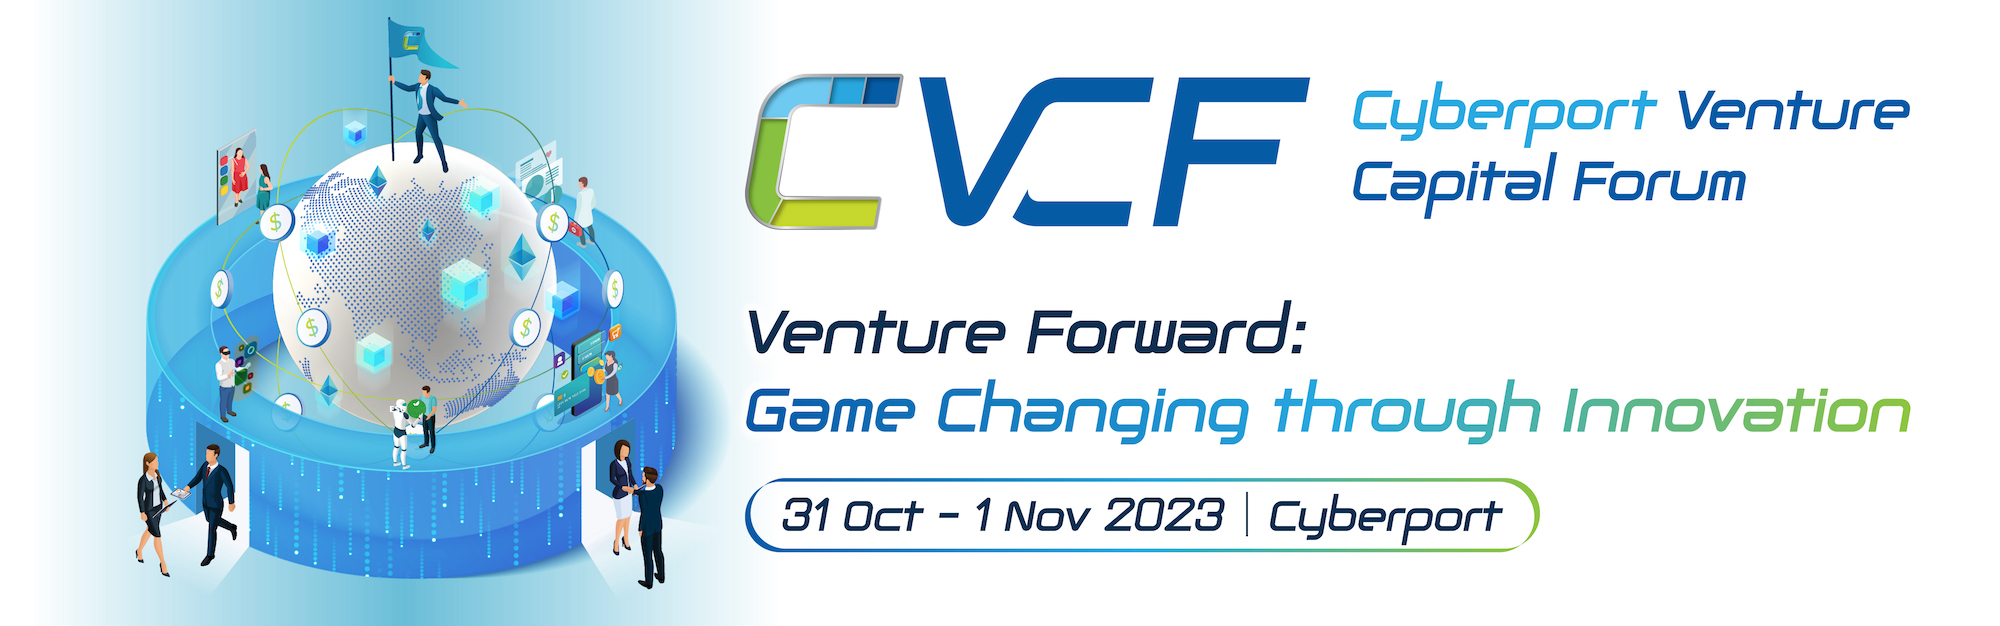 CVCF Cyberport Venture Capital Forum